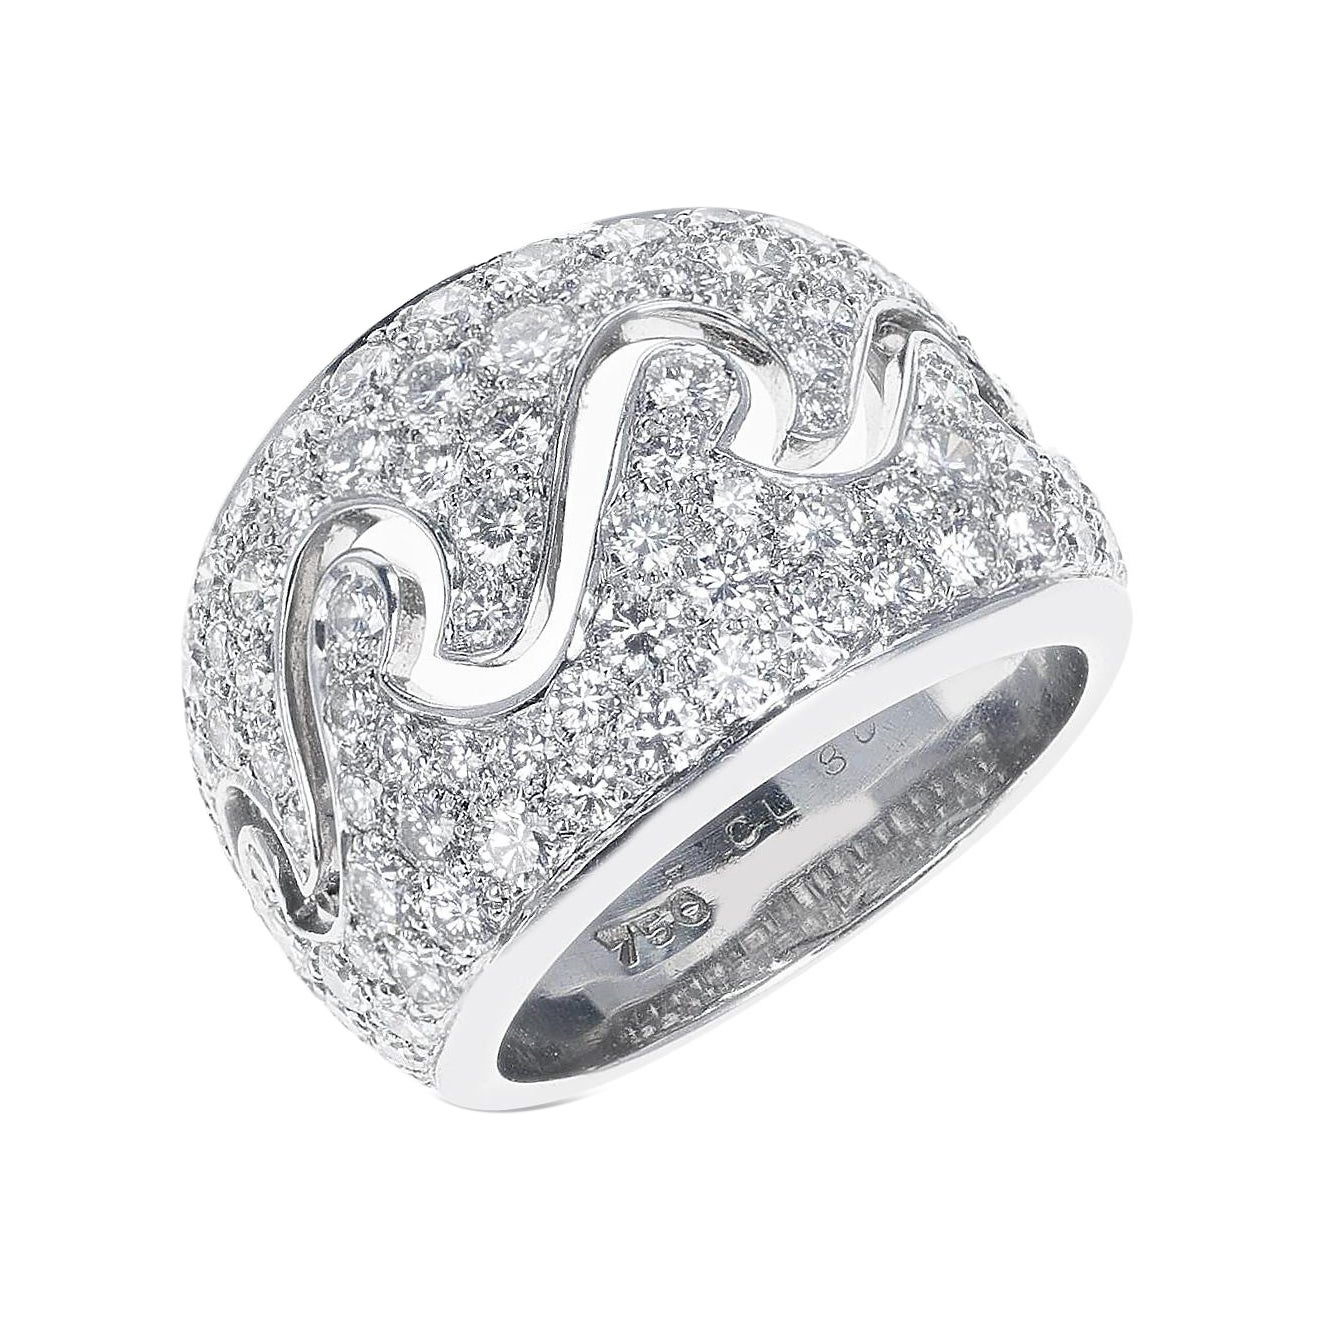 French Van Cleef & Arpels Diamond Wave Ring, 18k White